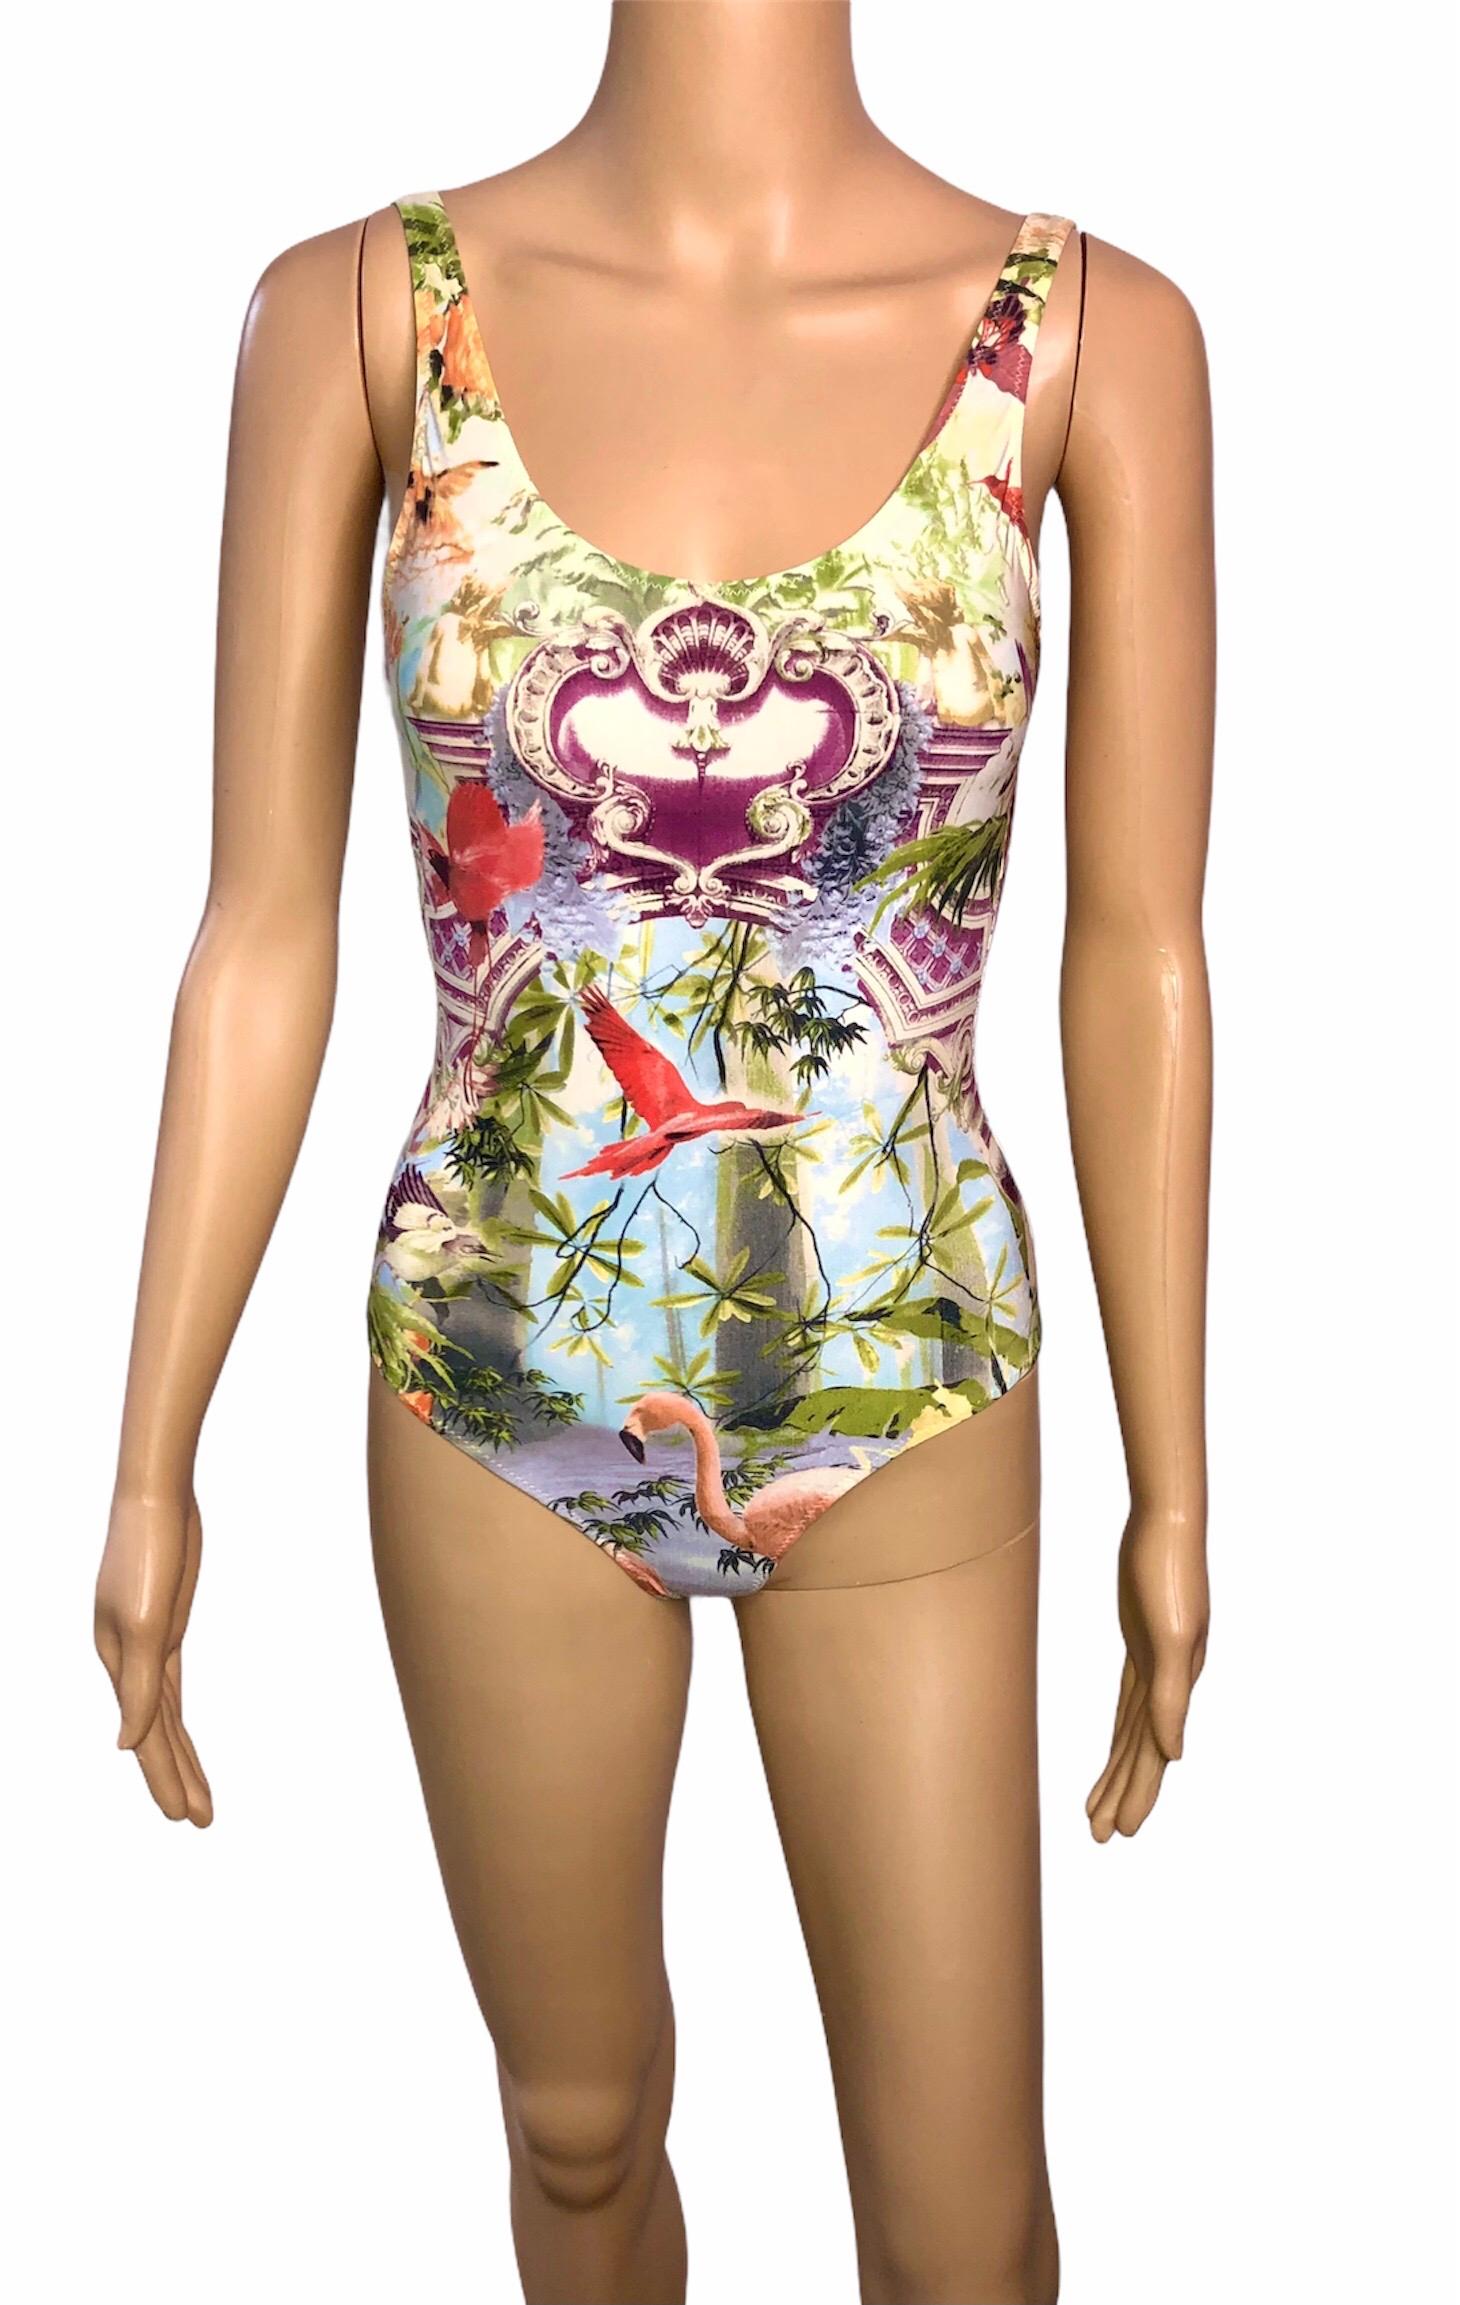 Jean Paul Gaultier Soleil S/S 1999 Flamingo Tropical Print Bodysuit One- Piece Swimwear Swimsuit IT 40

